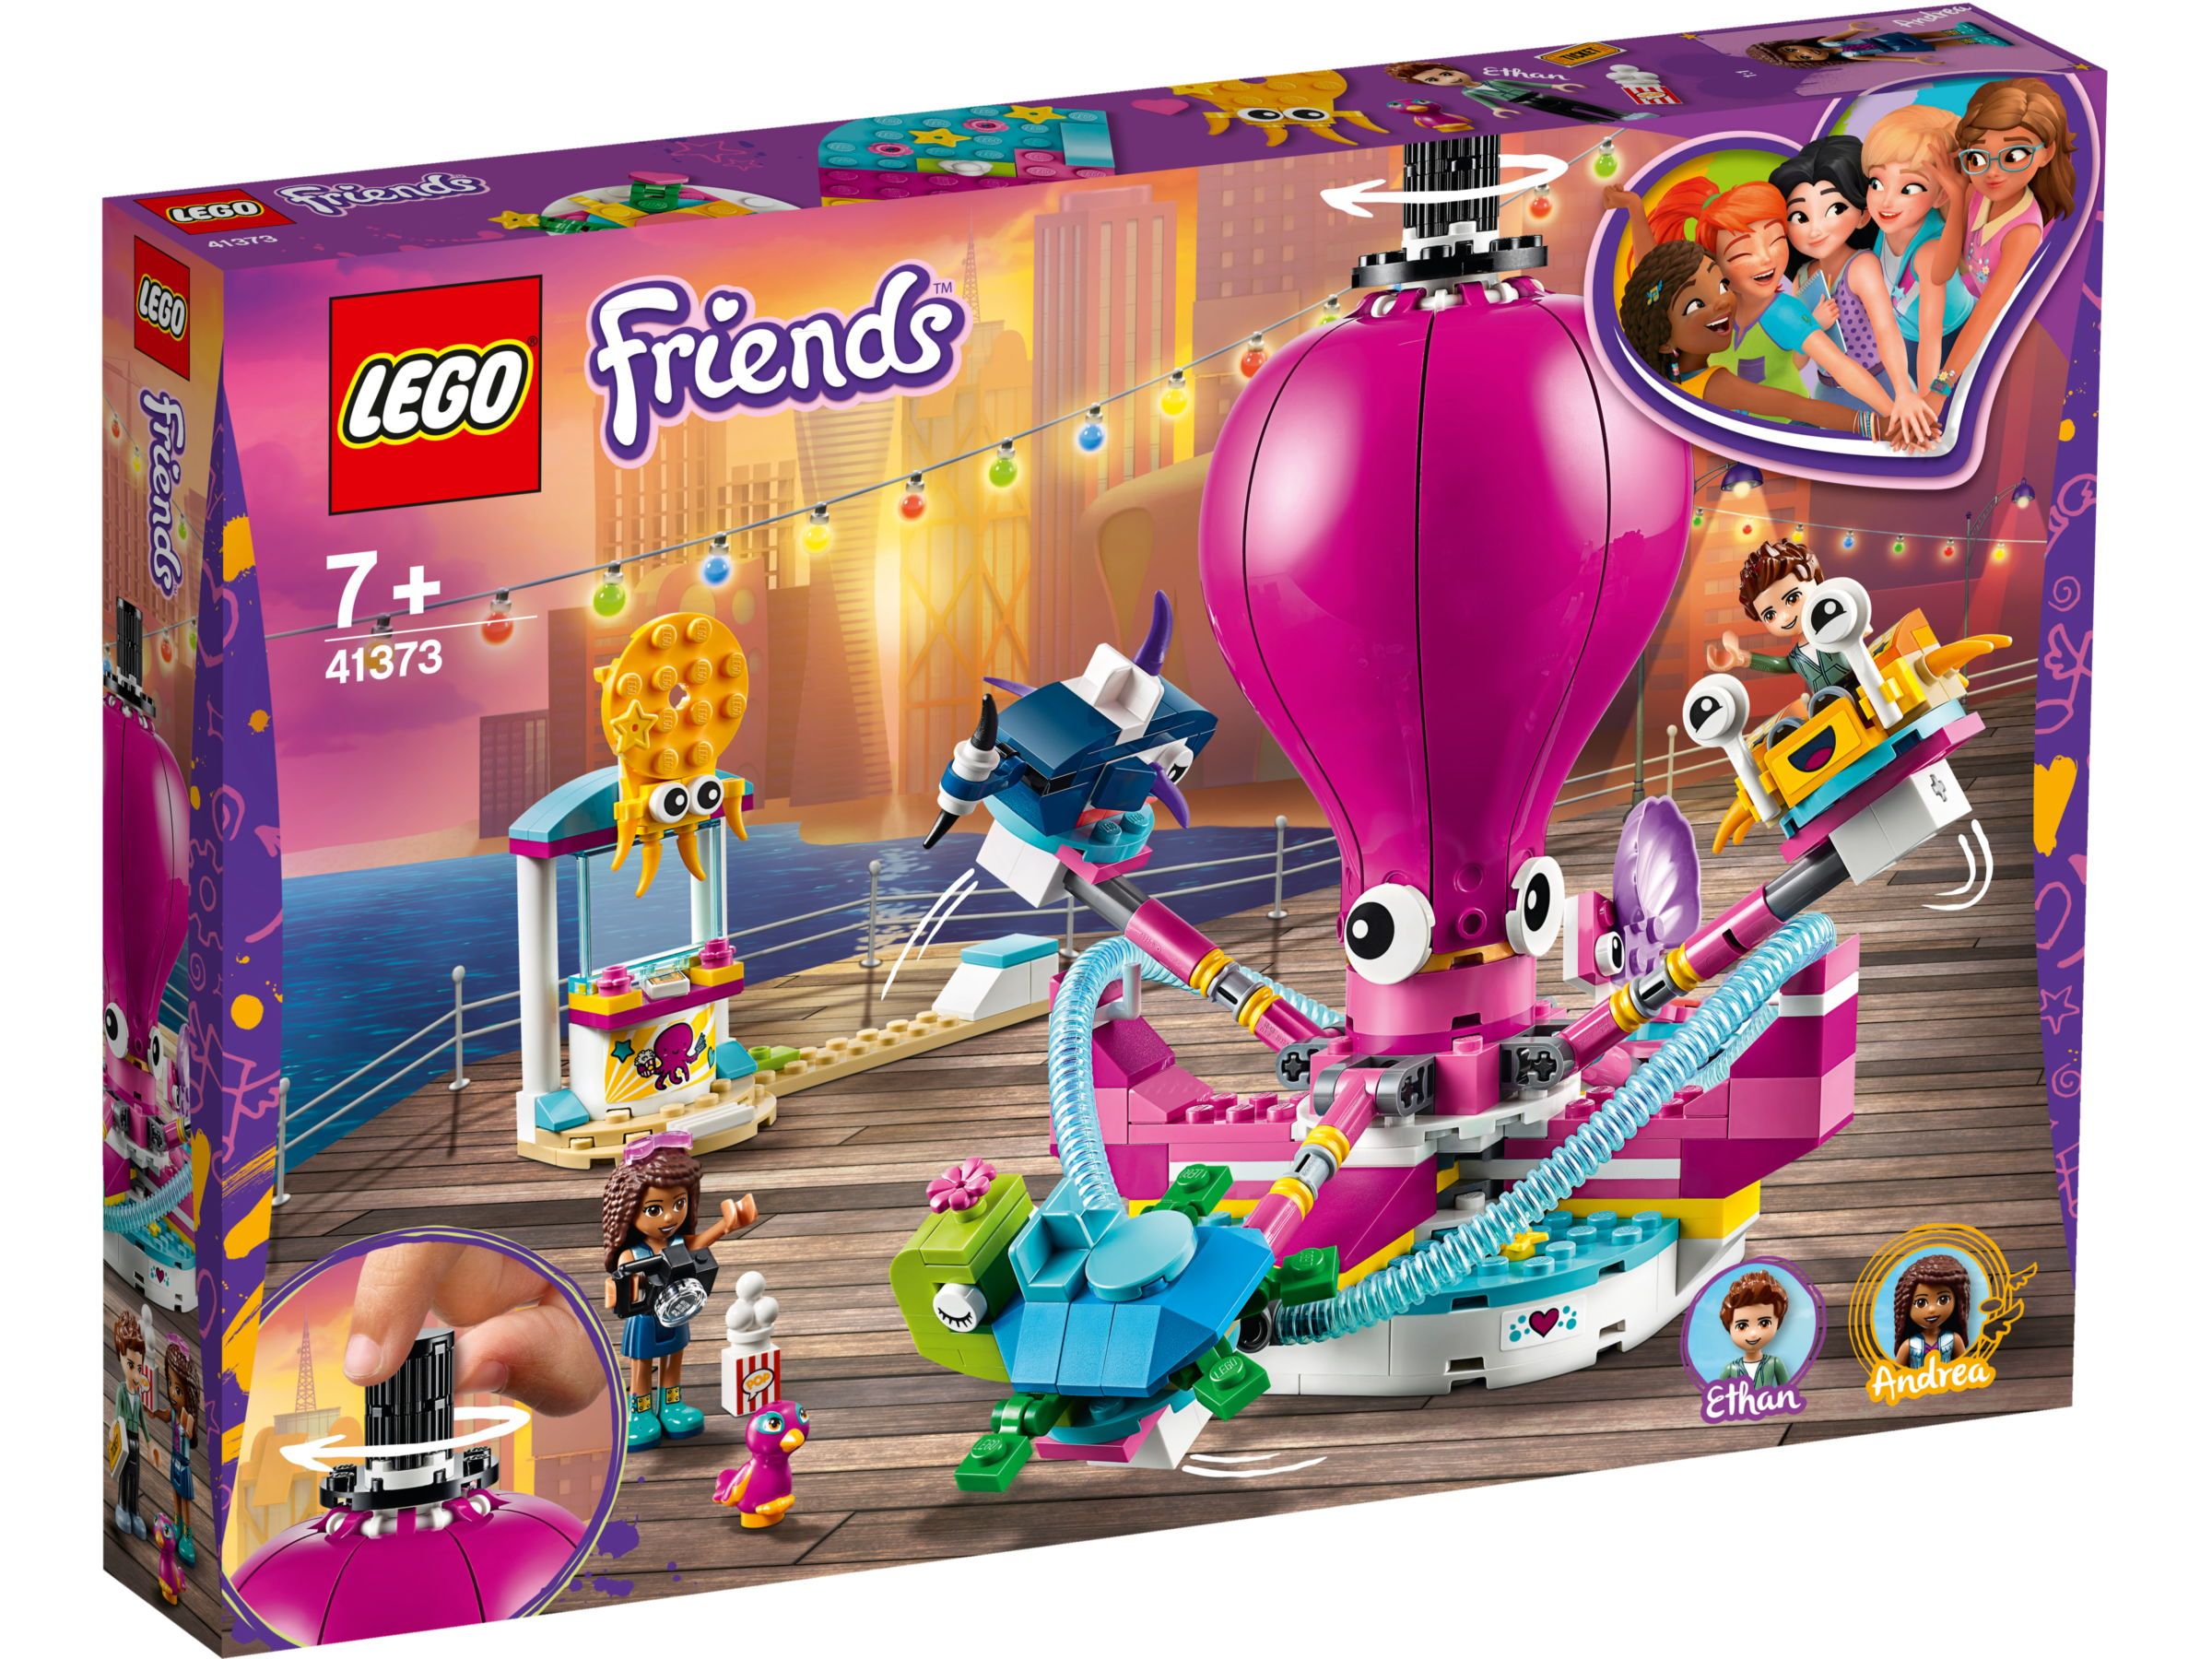 New LEGO Friends Summer Set Revealed BricksFanz